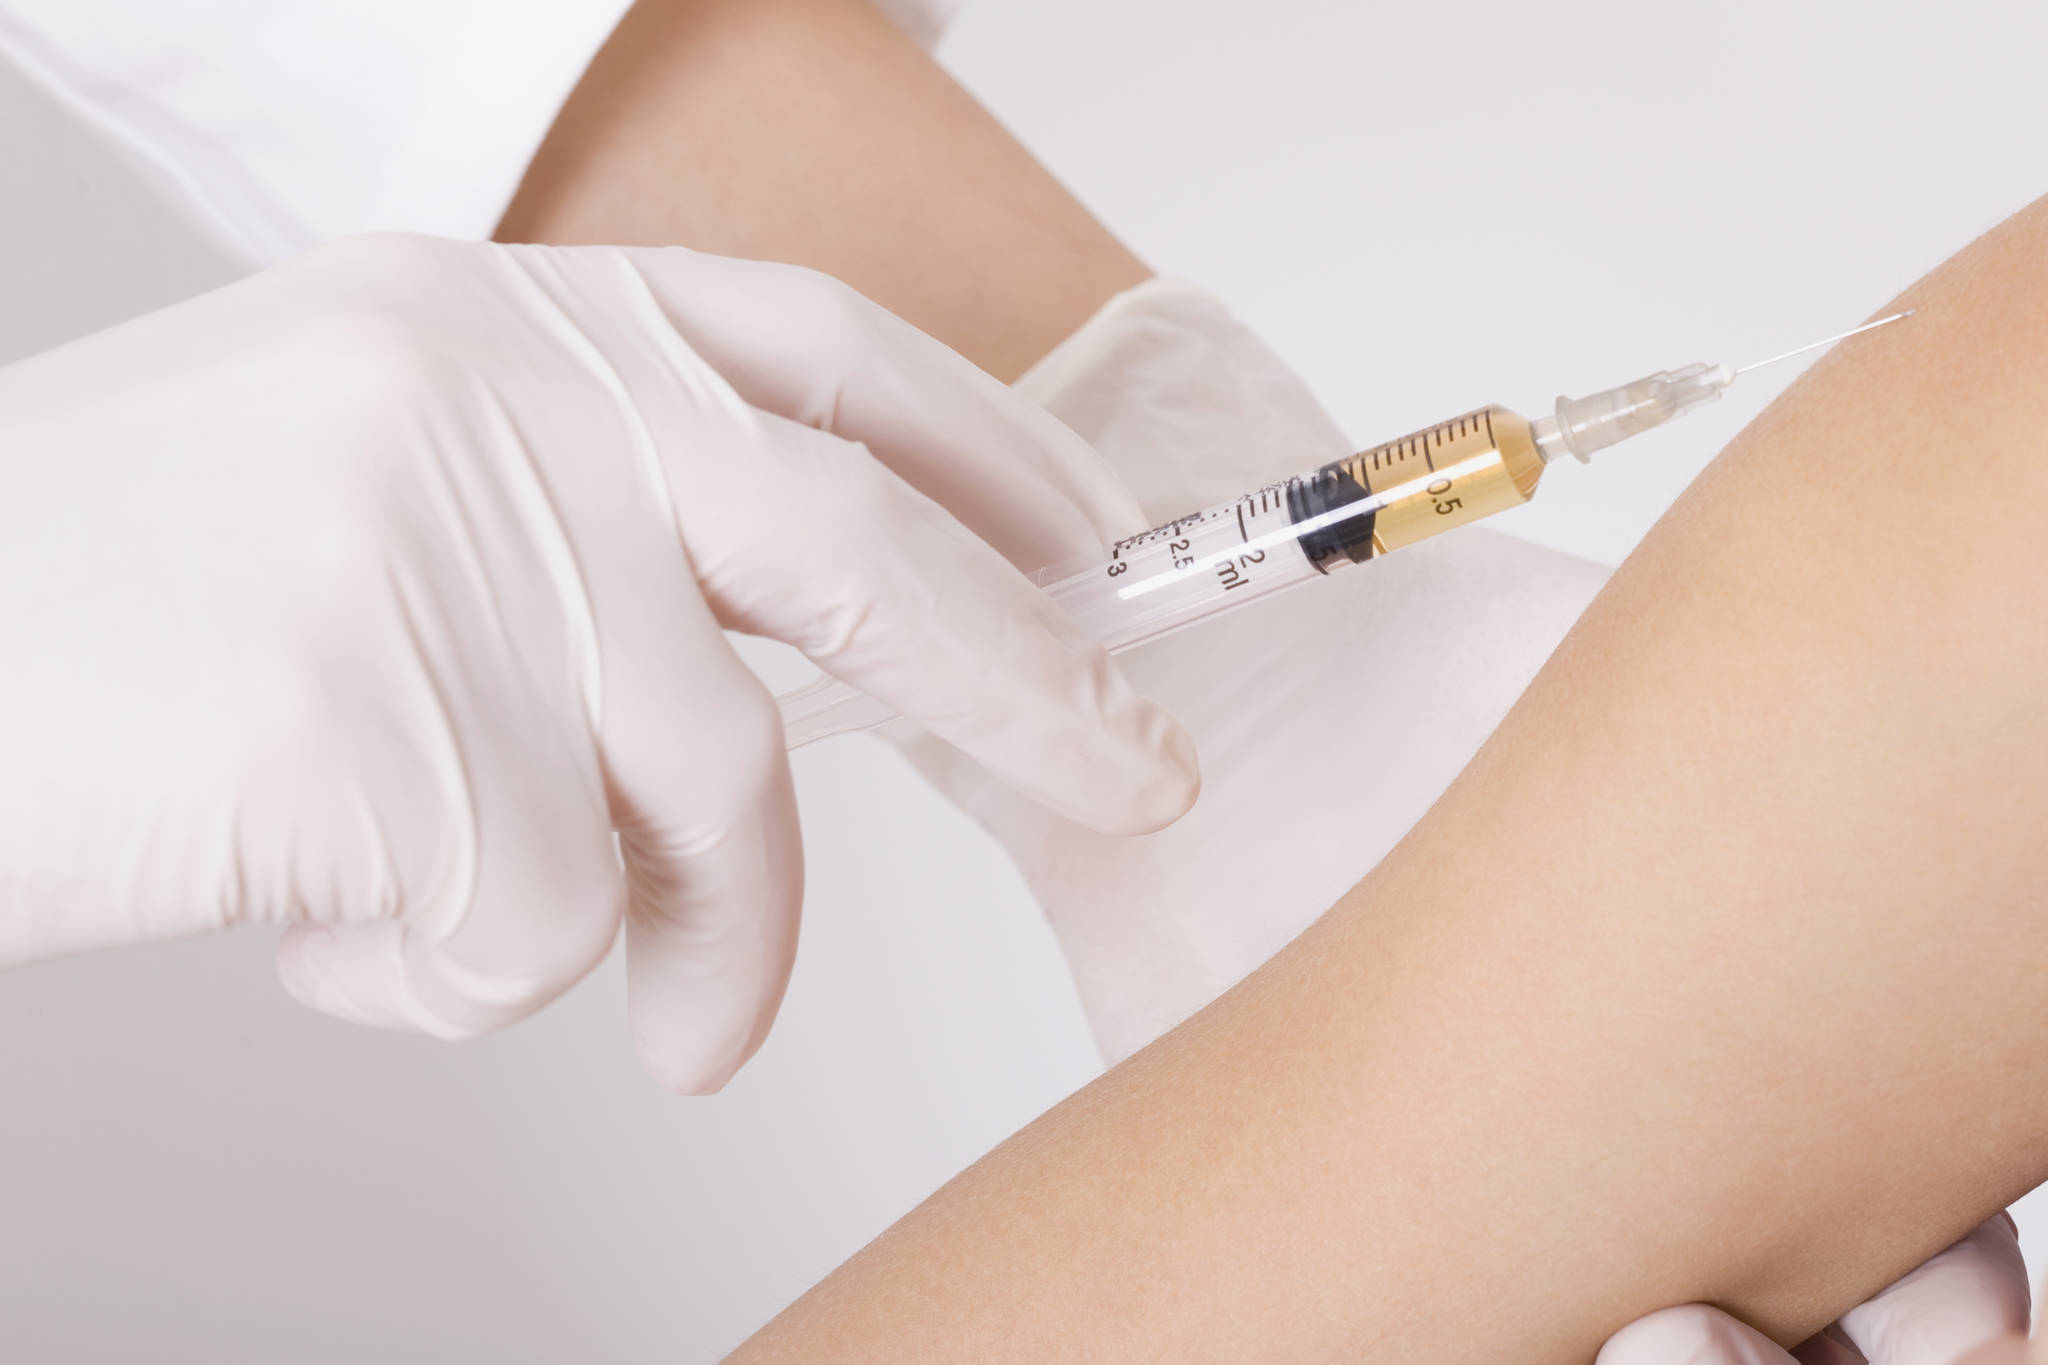 Kenai Public Health to host measles clinic on July 31